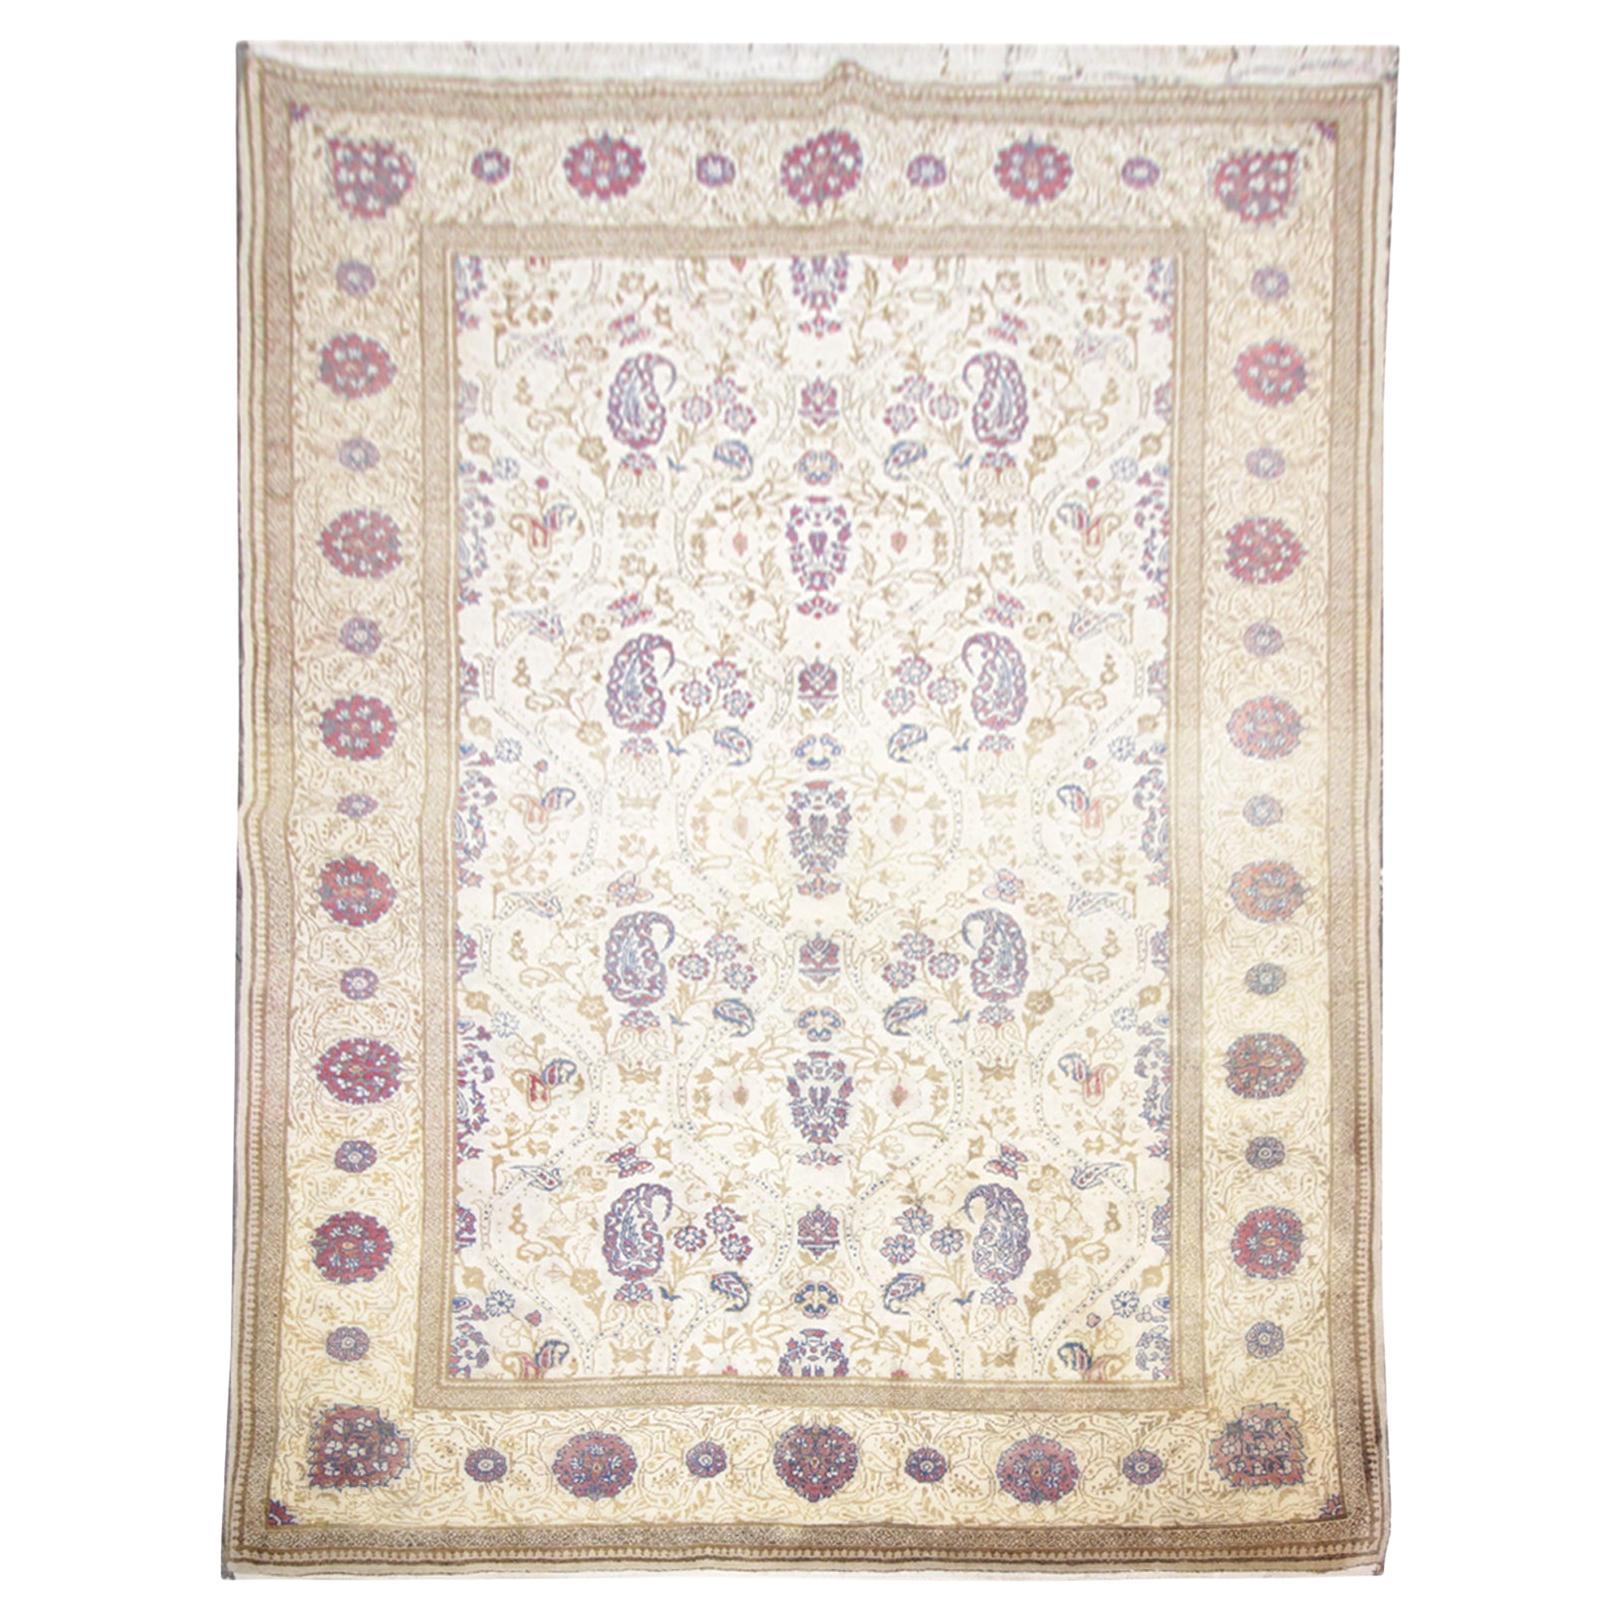 Oriental Handmade Carpet Vintage Cream Wool Living Room Rug CHR81